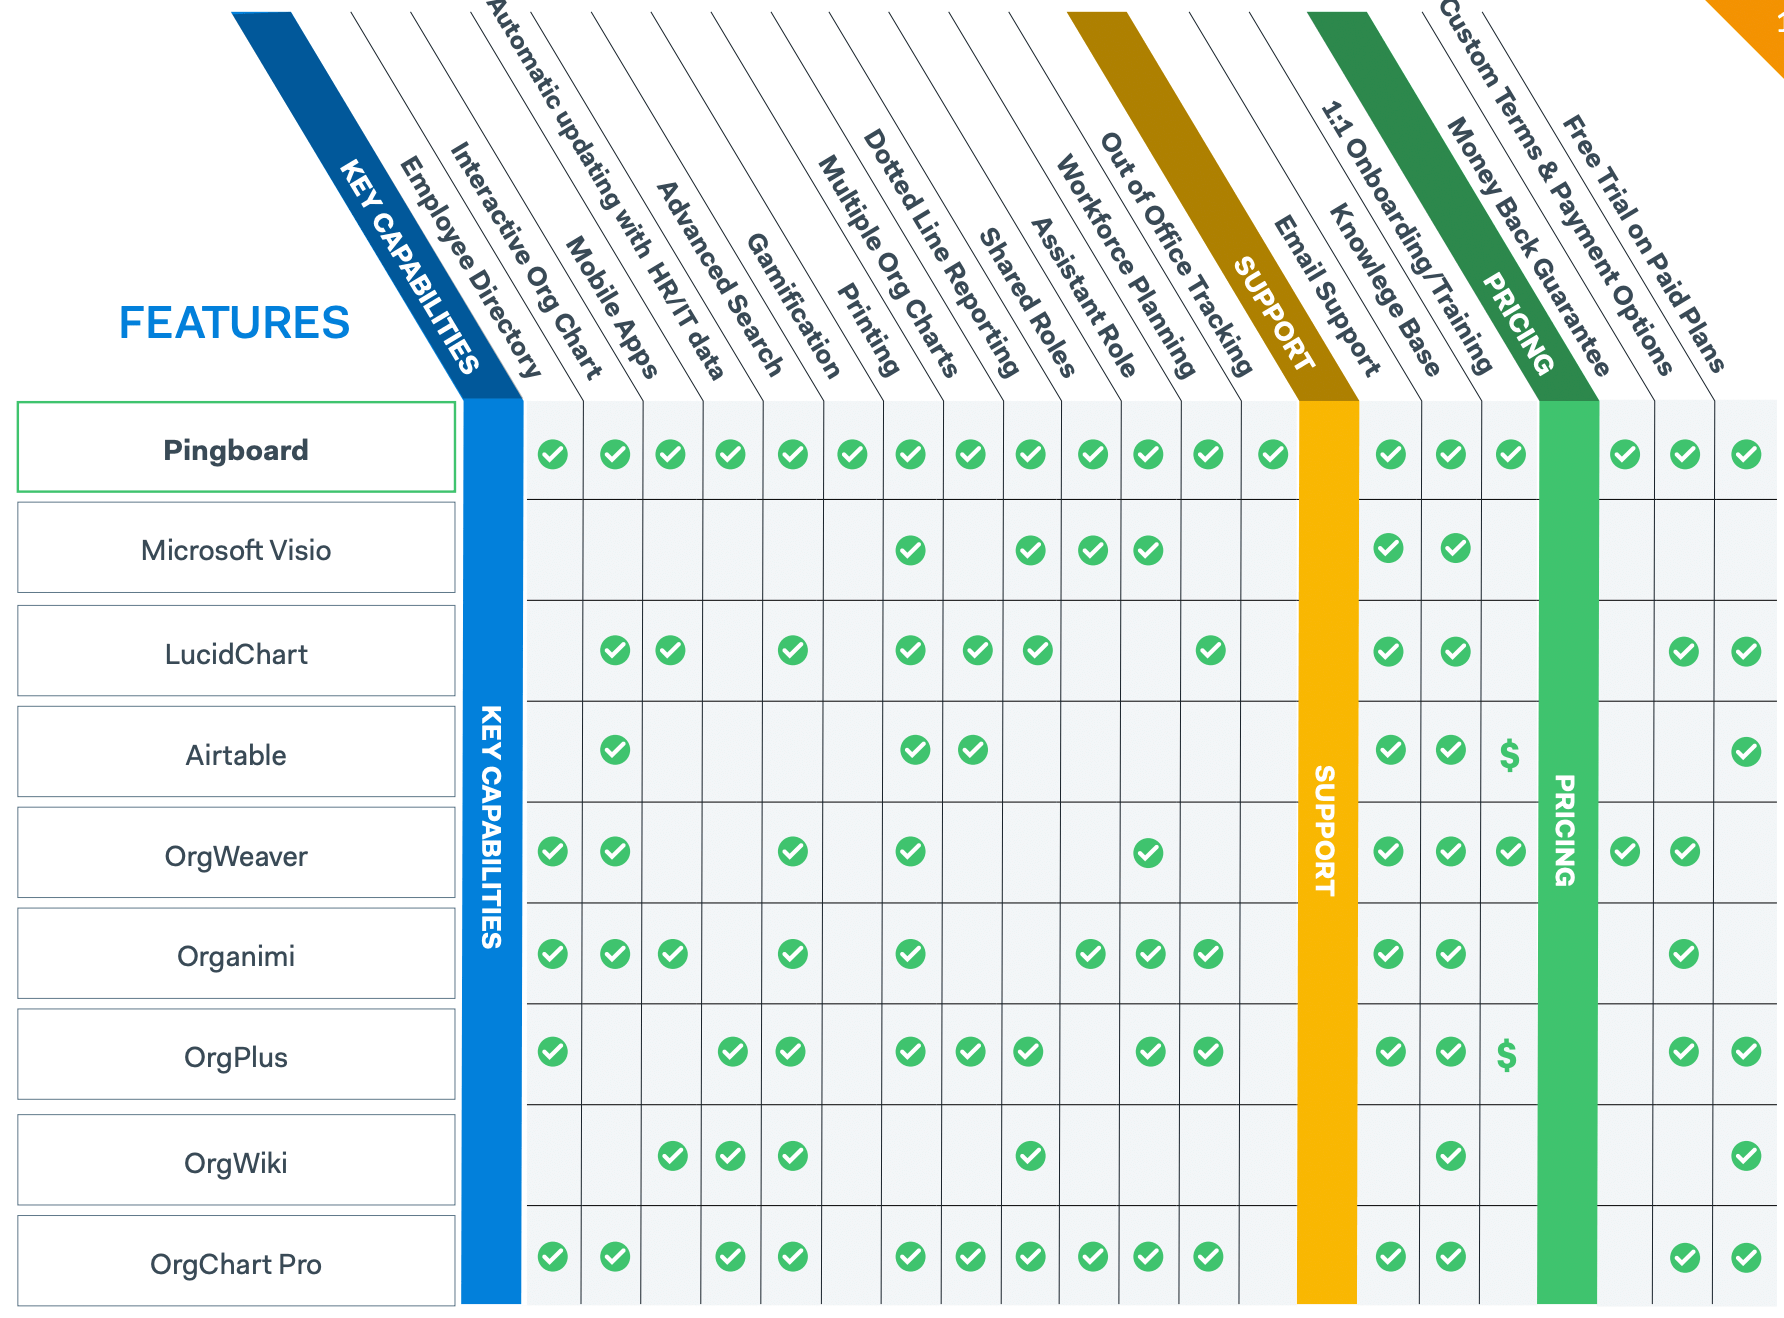 Pinboard vendor comparison chart